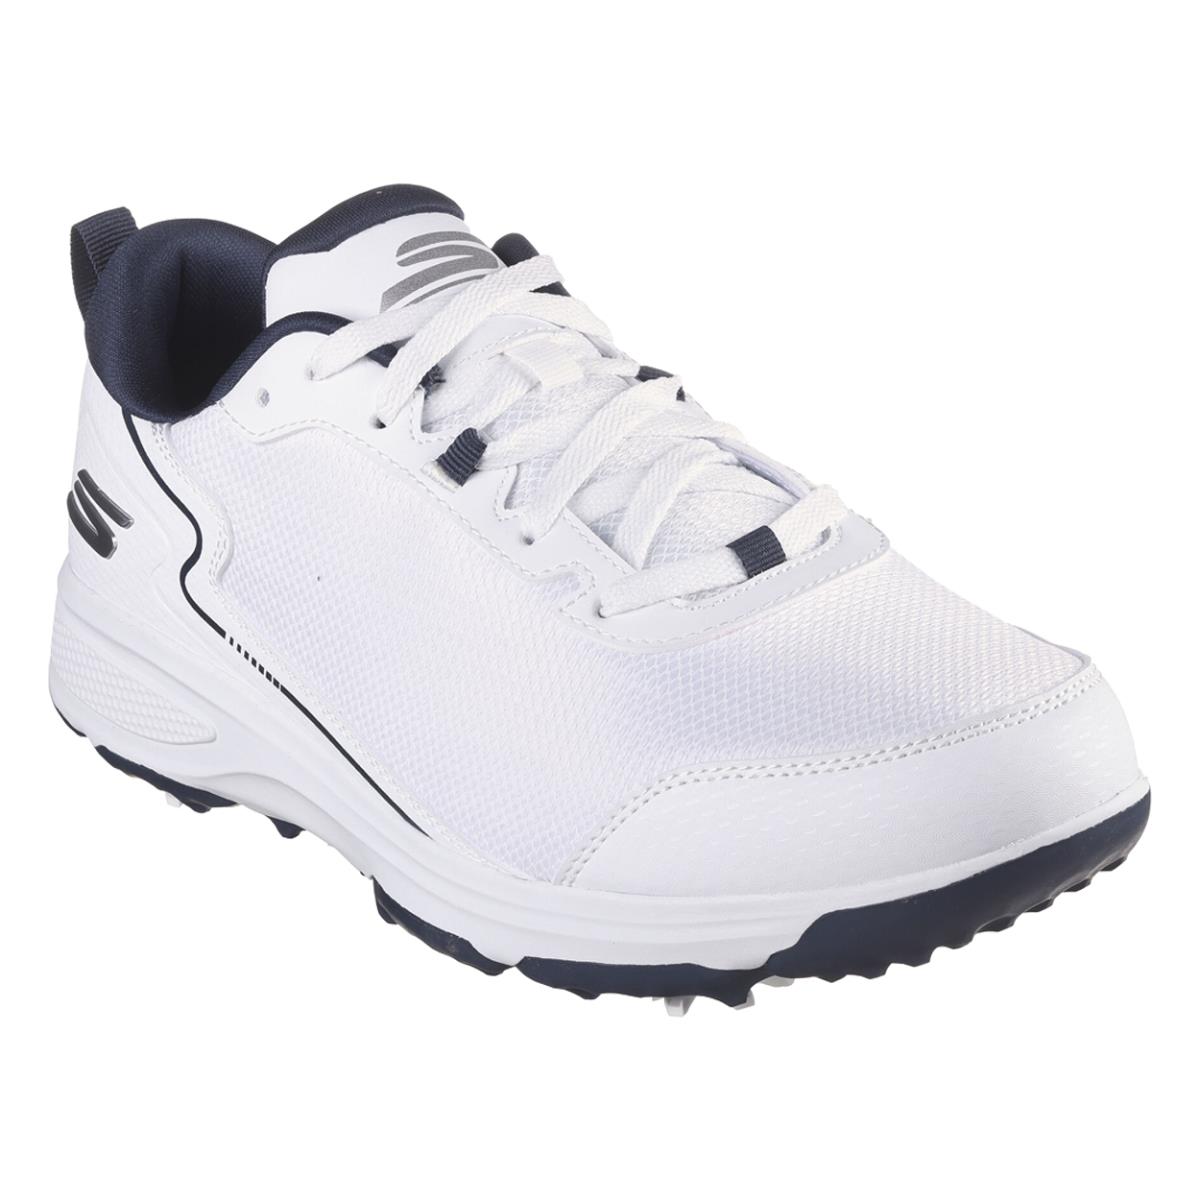 Skechers Men`s Torque Sport Fairway Relaxed Fit Soft Spike Golf Shoe White/Navy